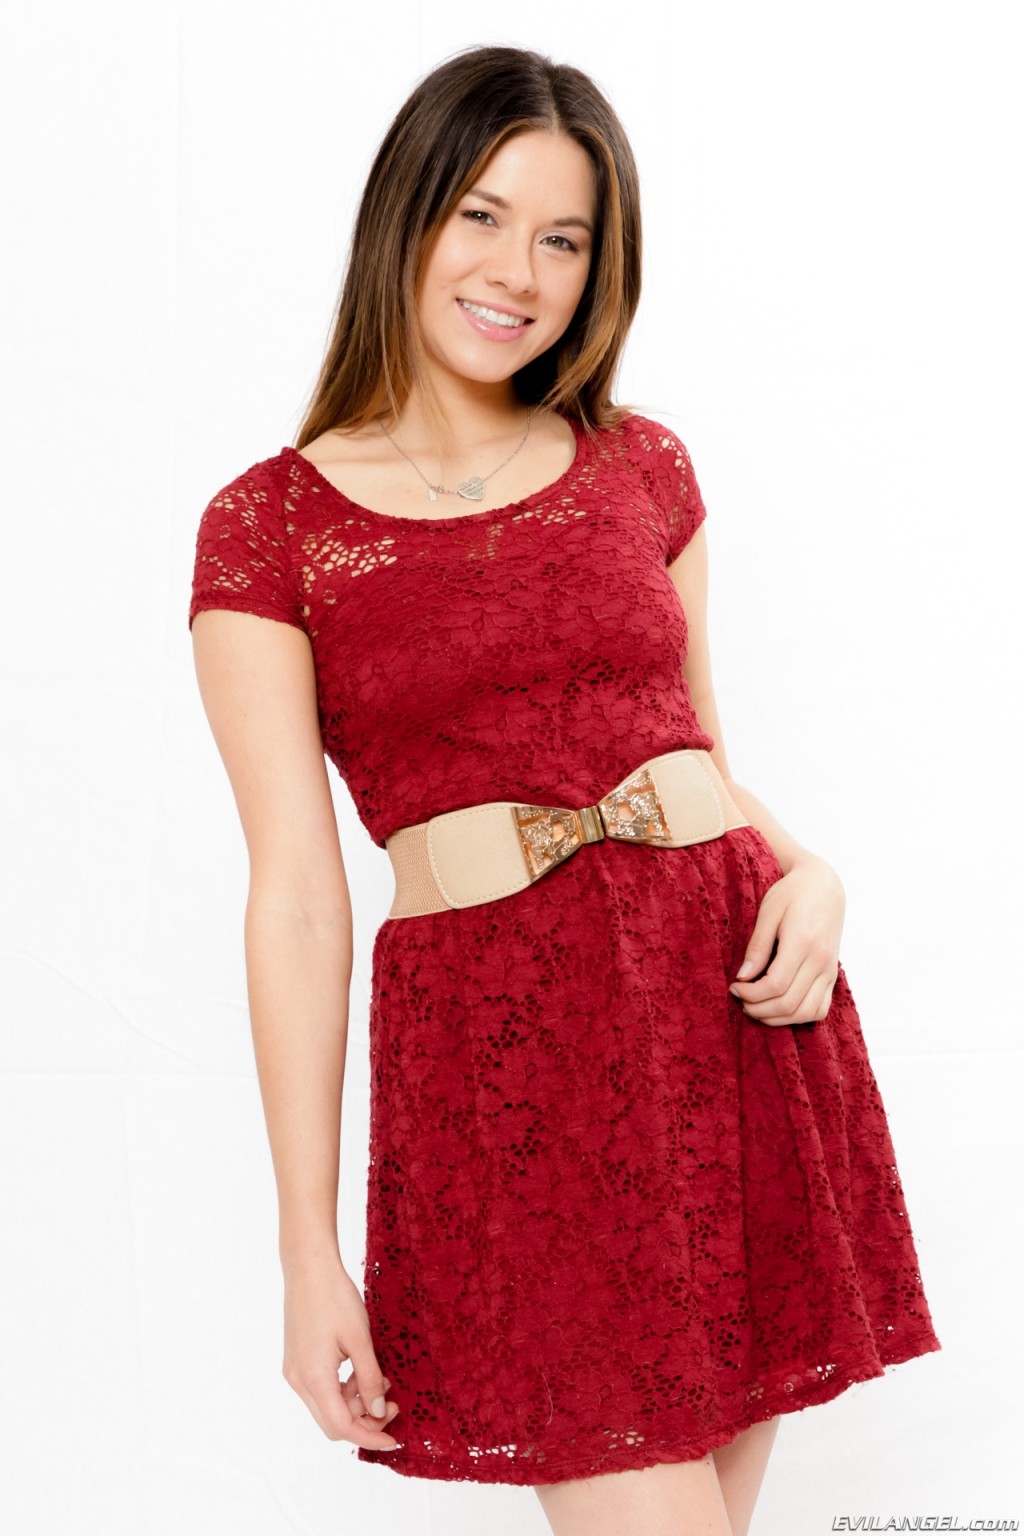 Shyla jennings in vestito rosso
 #76437988